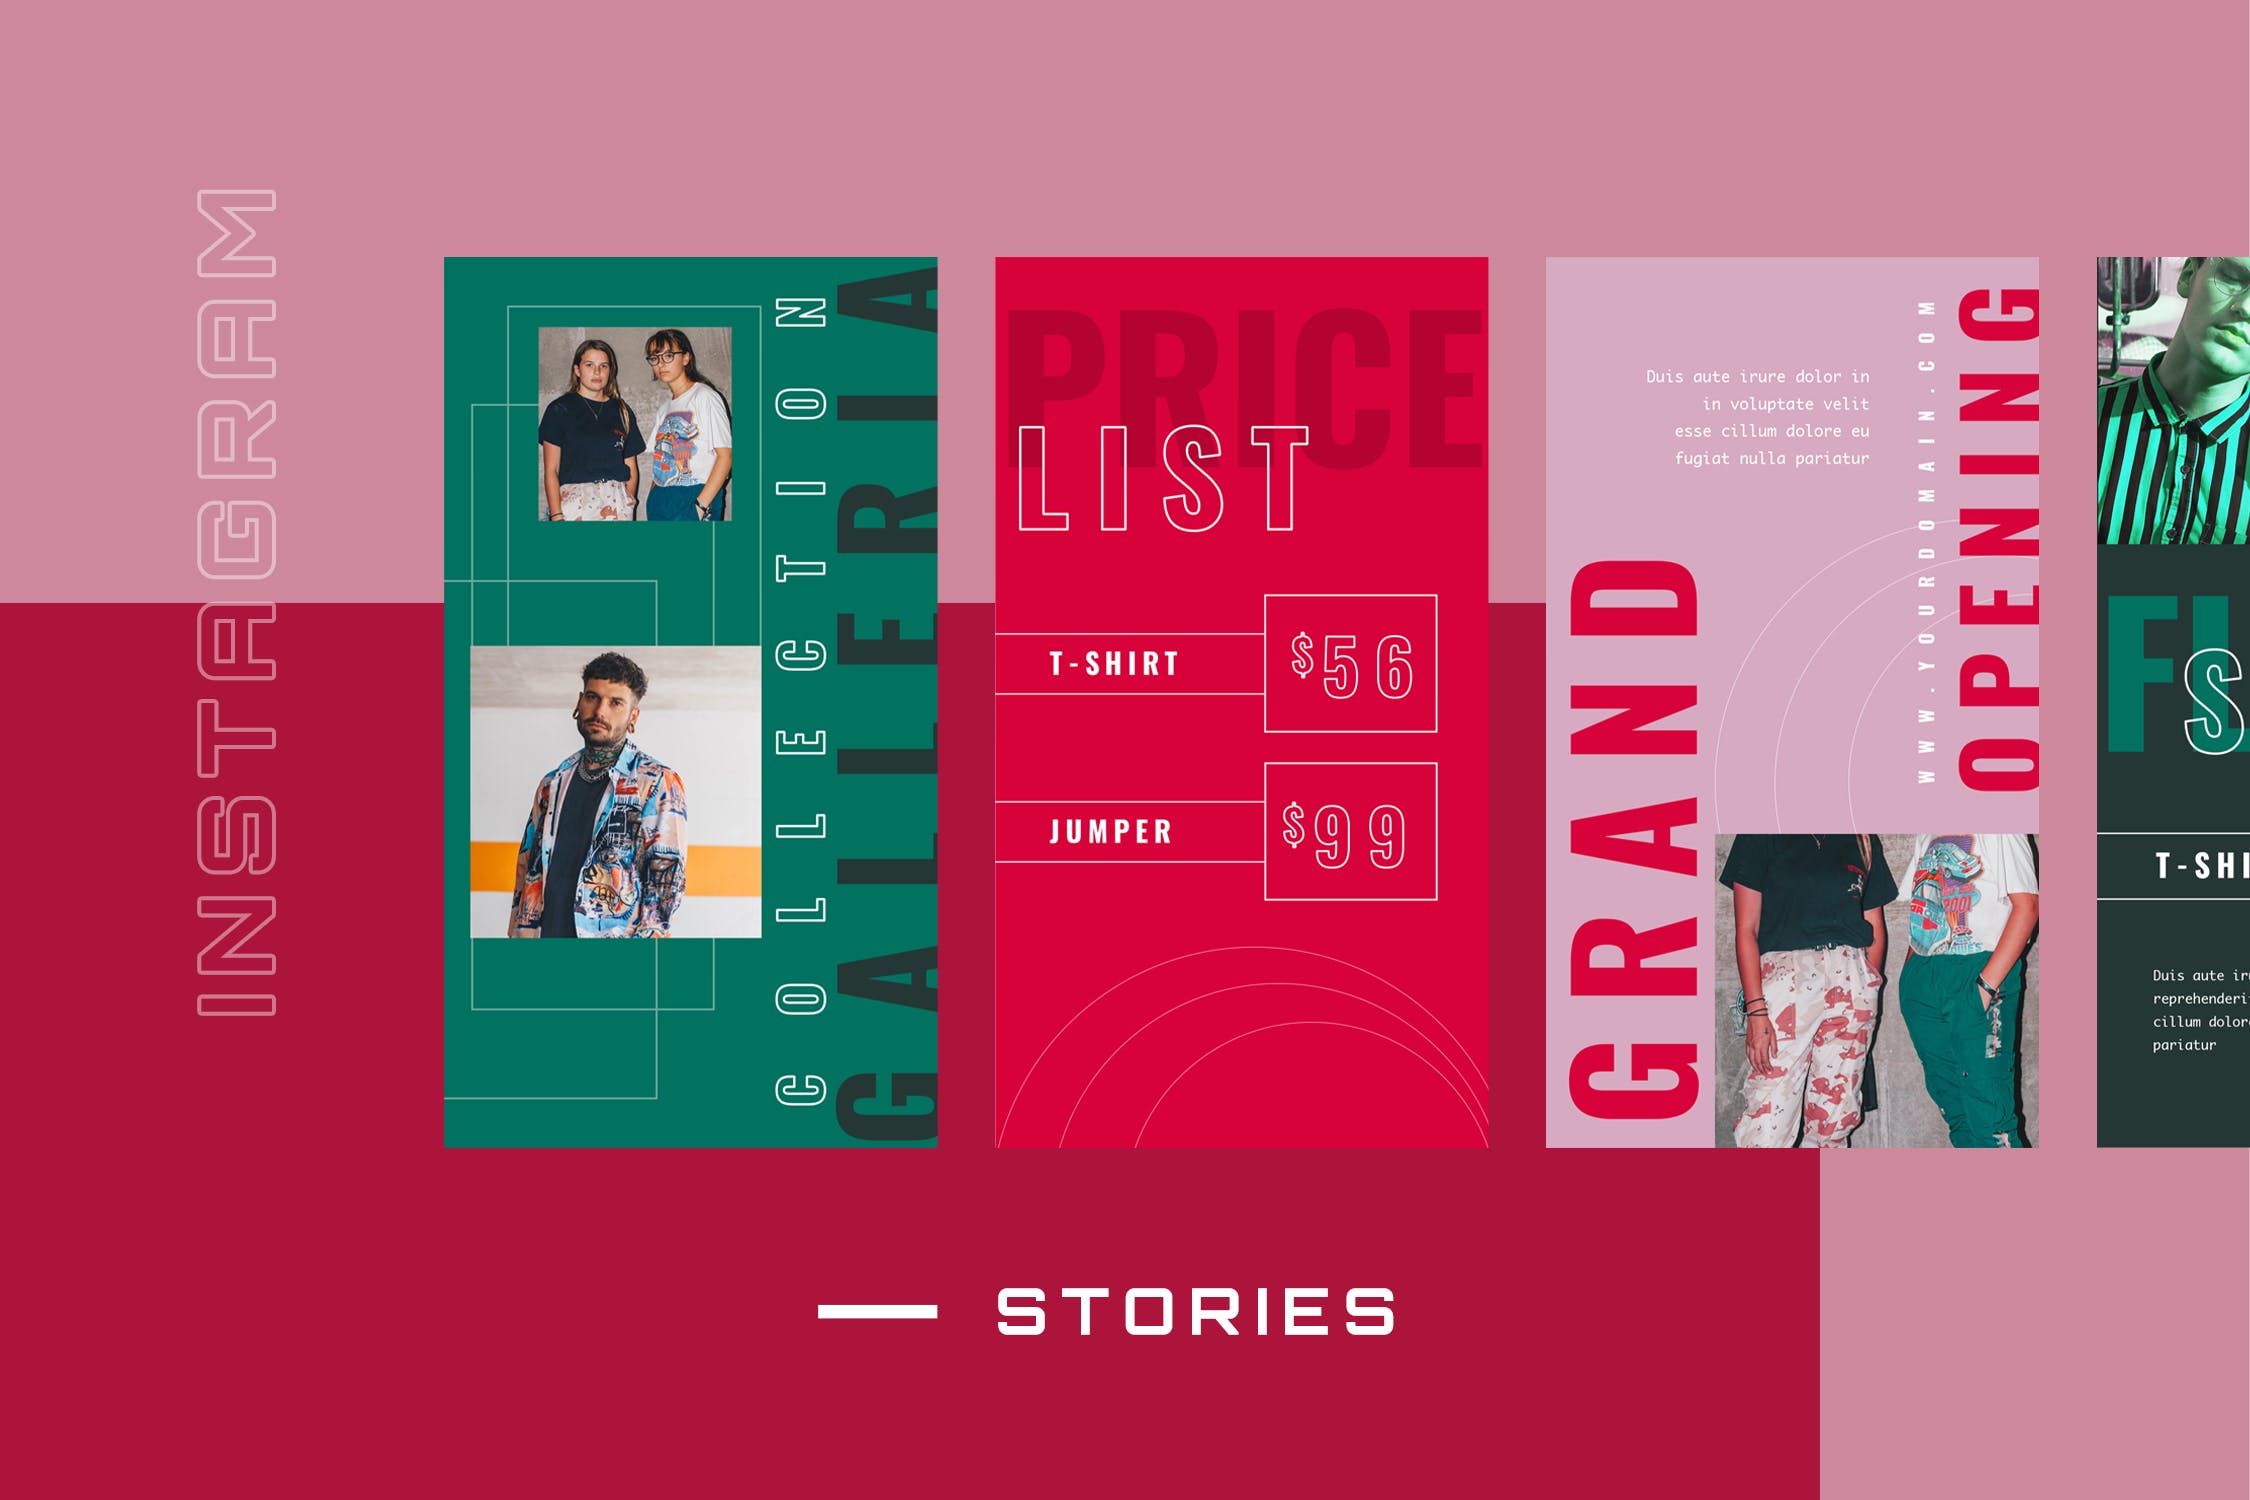 Instagram社交平台品牌故事设计模板素材库精选素材 Eighten – Instagram Stories – Social Media Kit插图(1)